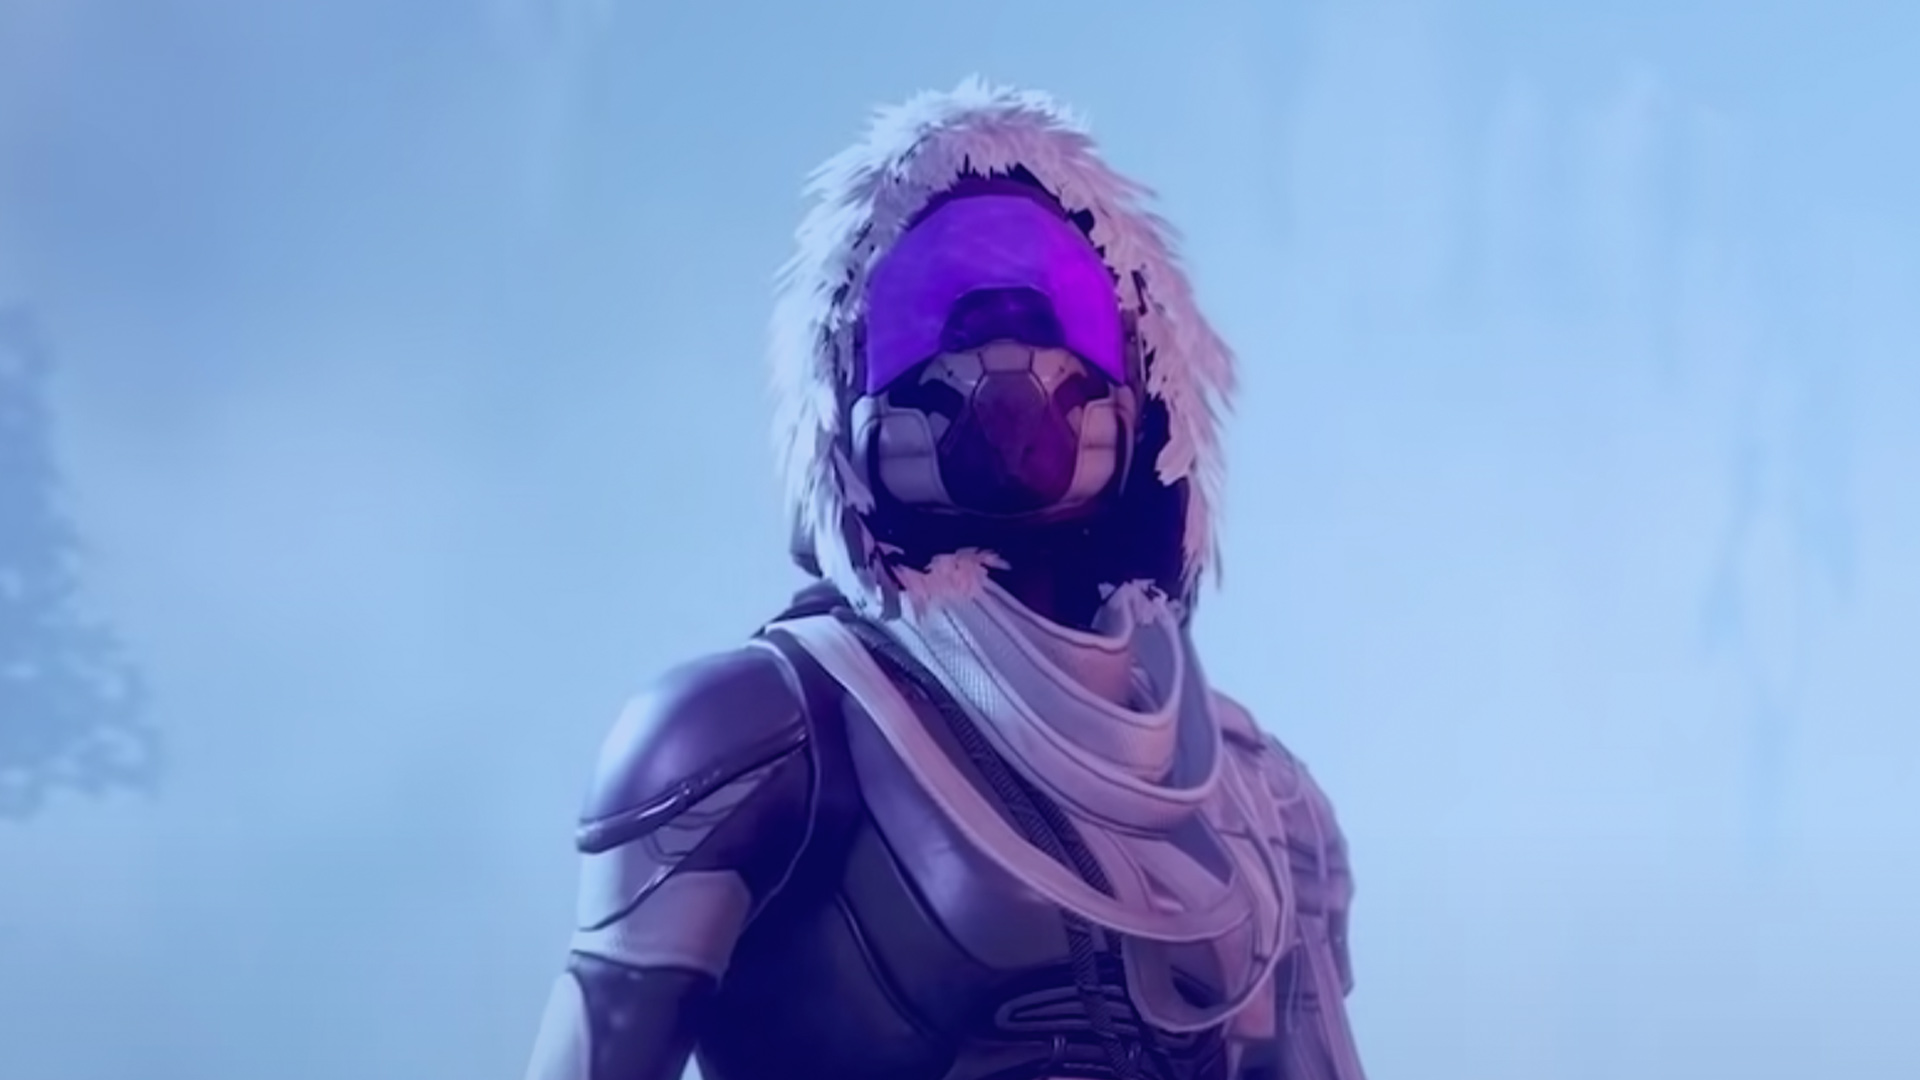 Destiny 2 blue weapons, gear won't drop after players reach soft cap